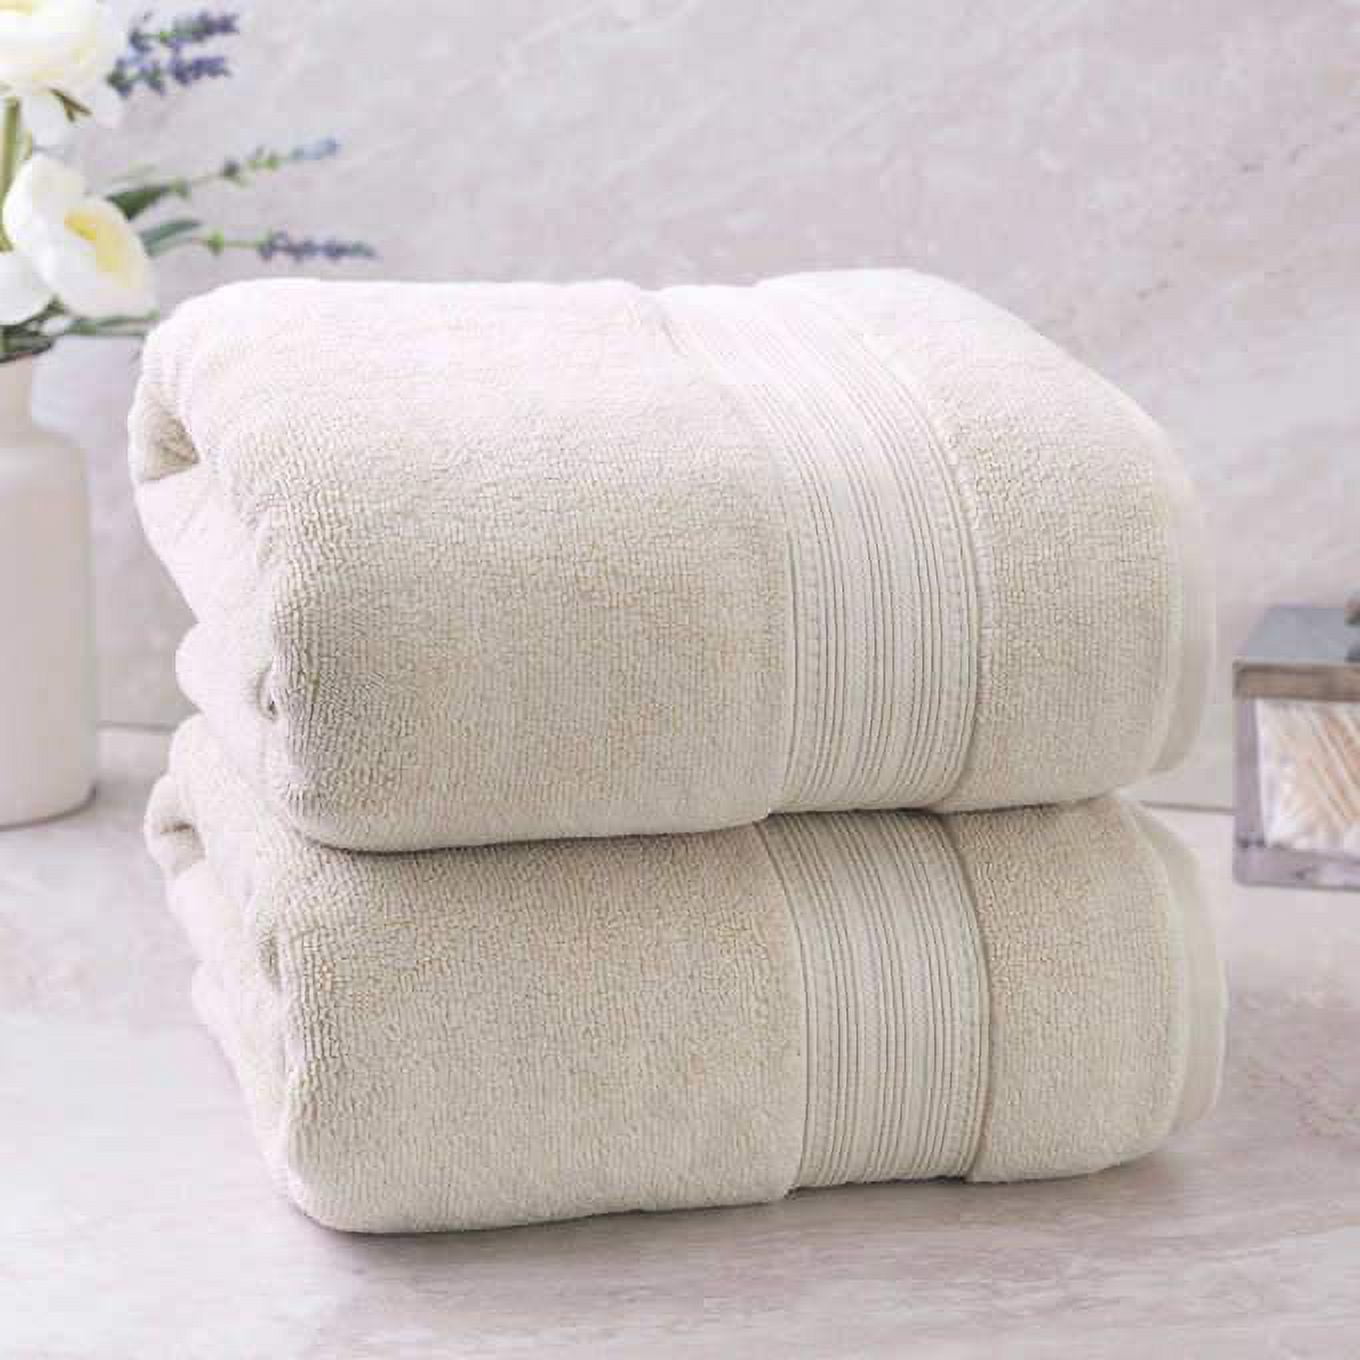 Charisma Luxury Bath Towel - 100% Hygro Cotton, Classic White